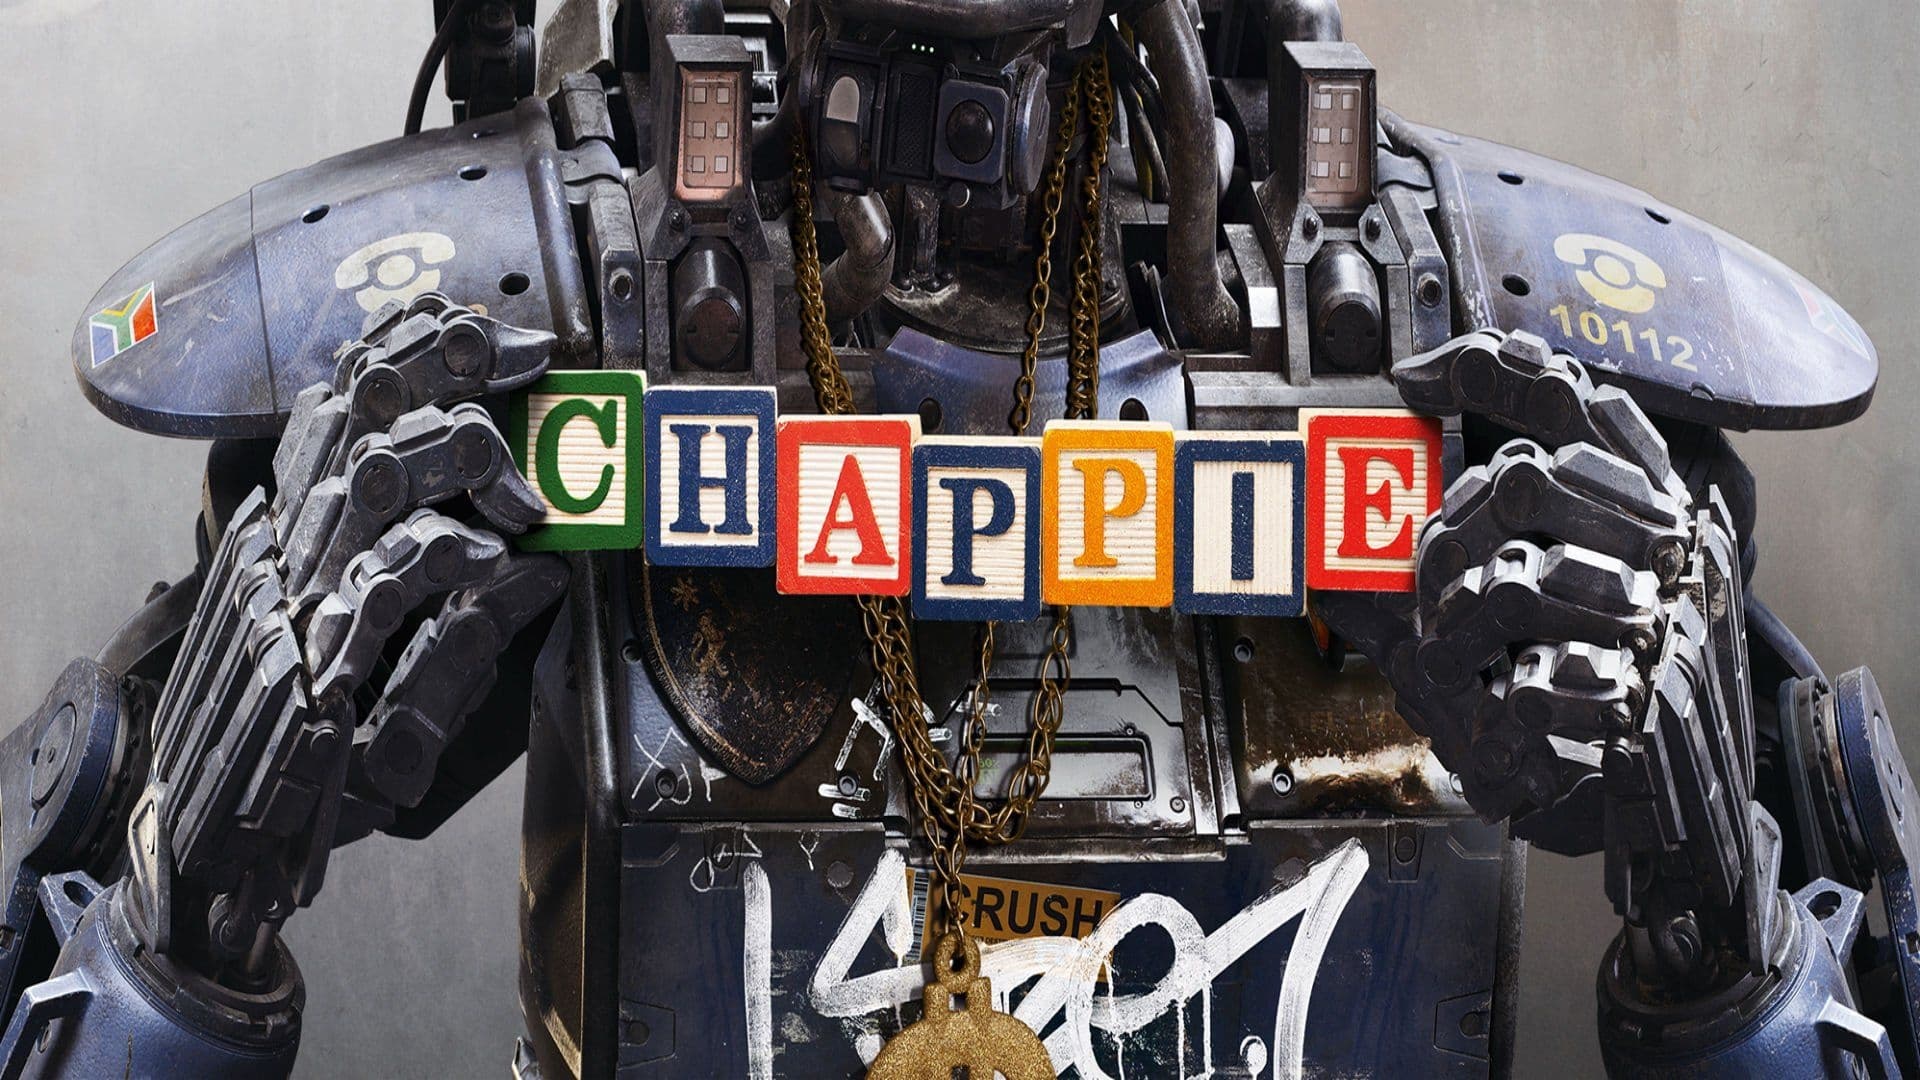 Робот по имени Чаппи (2015)